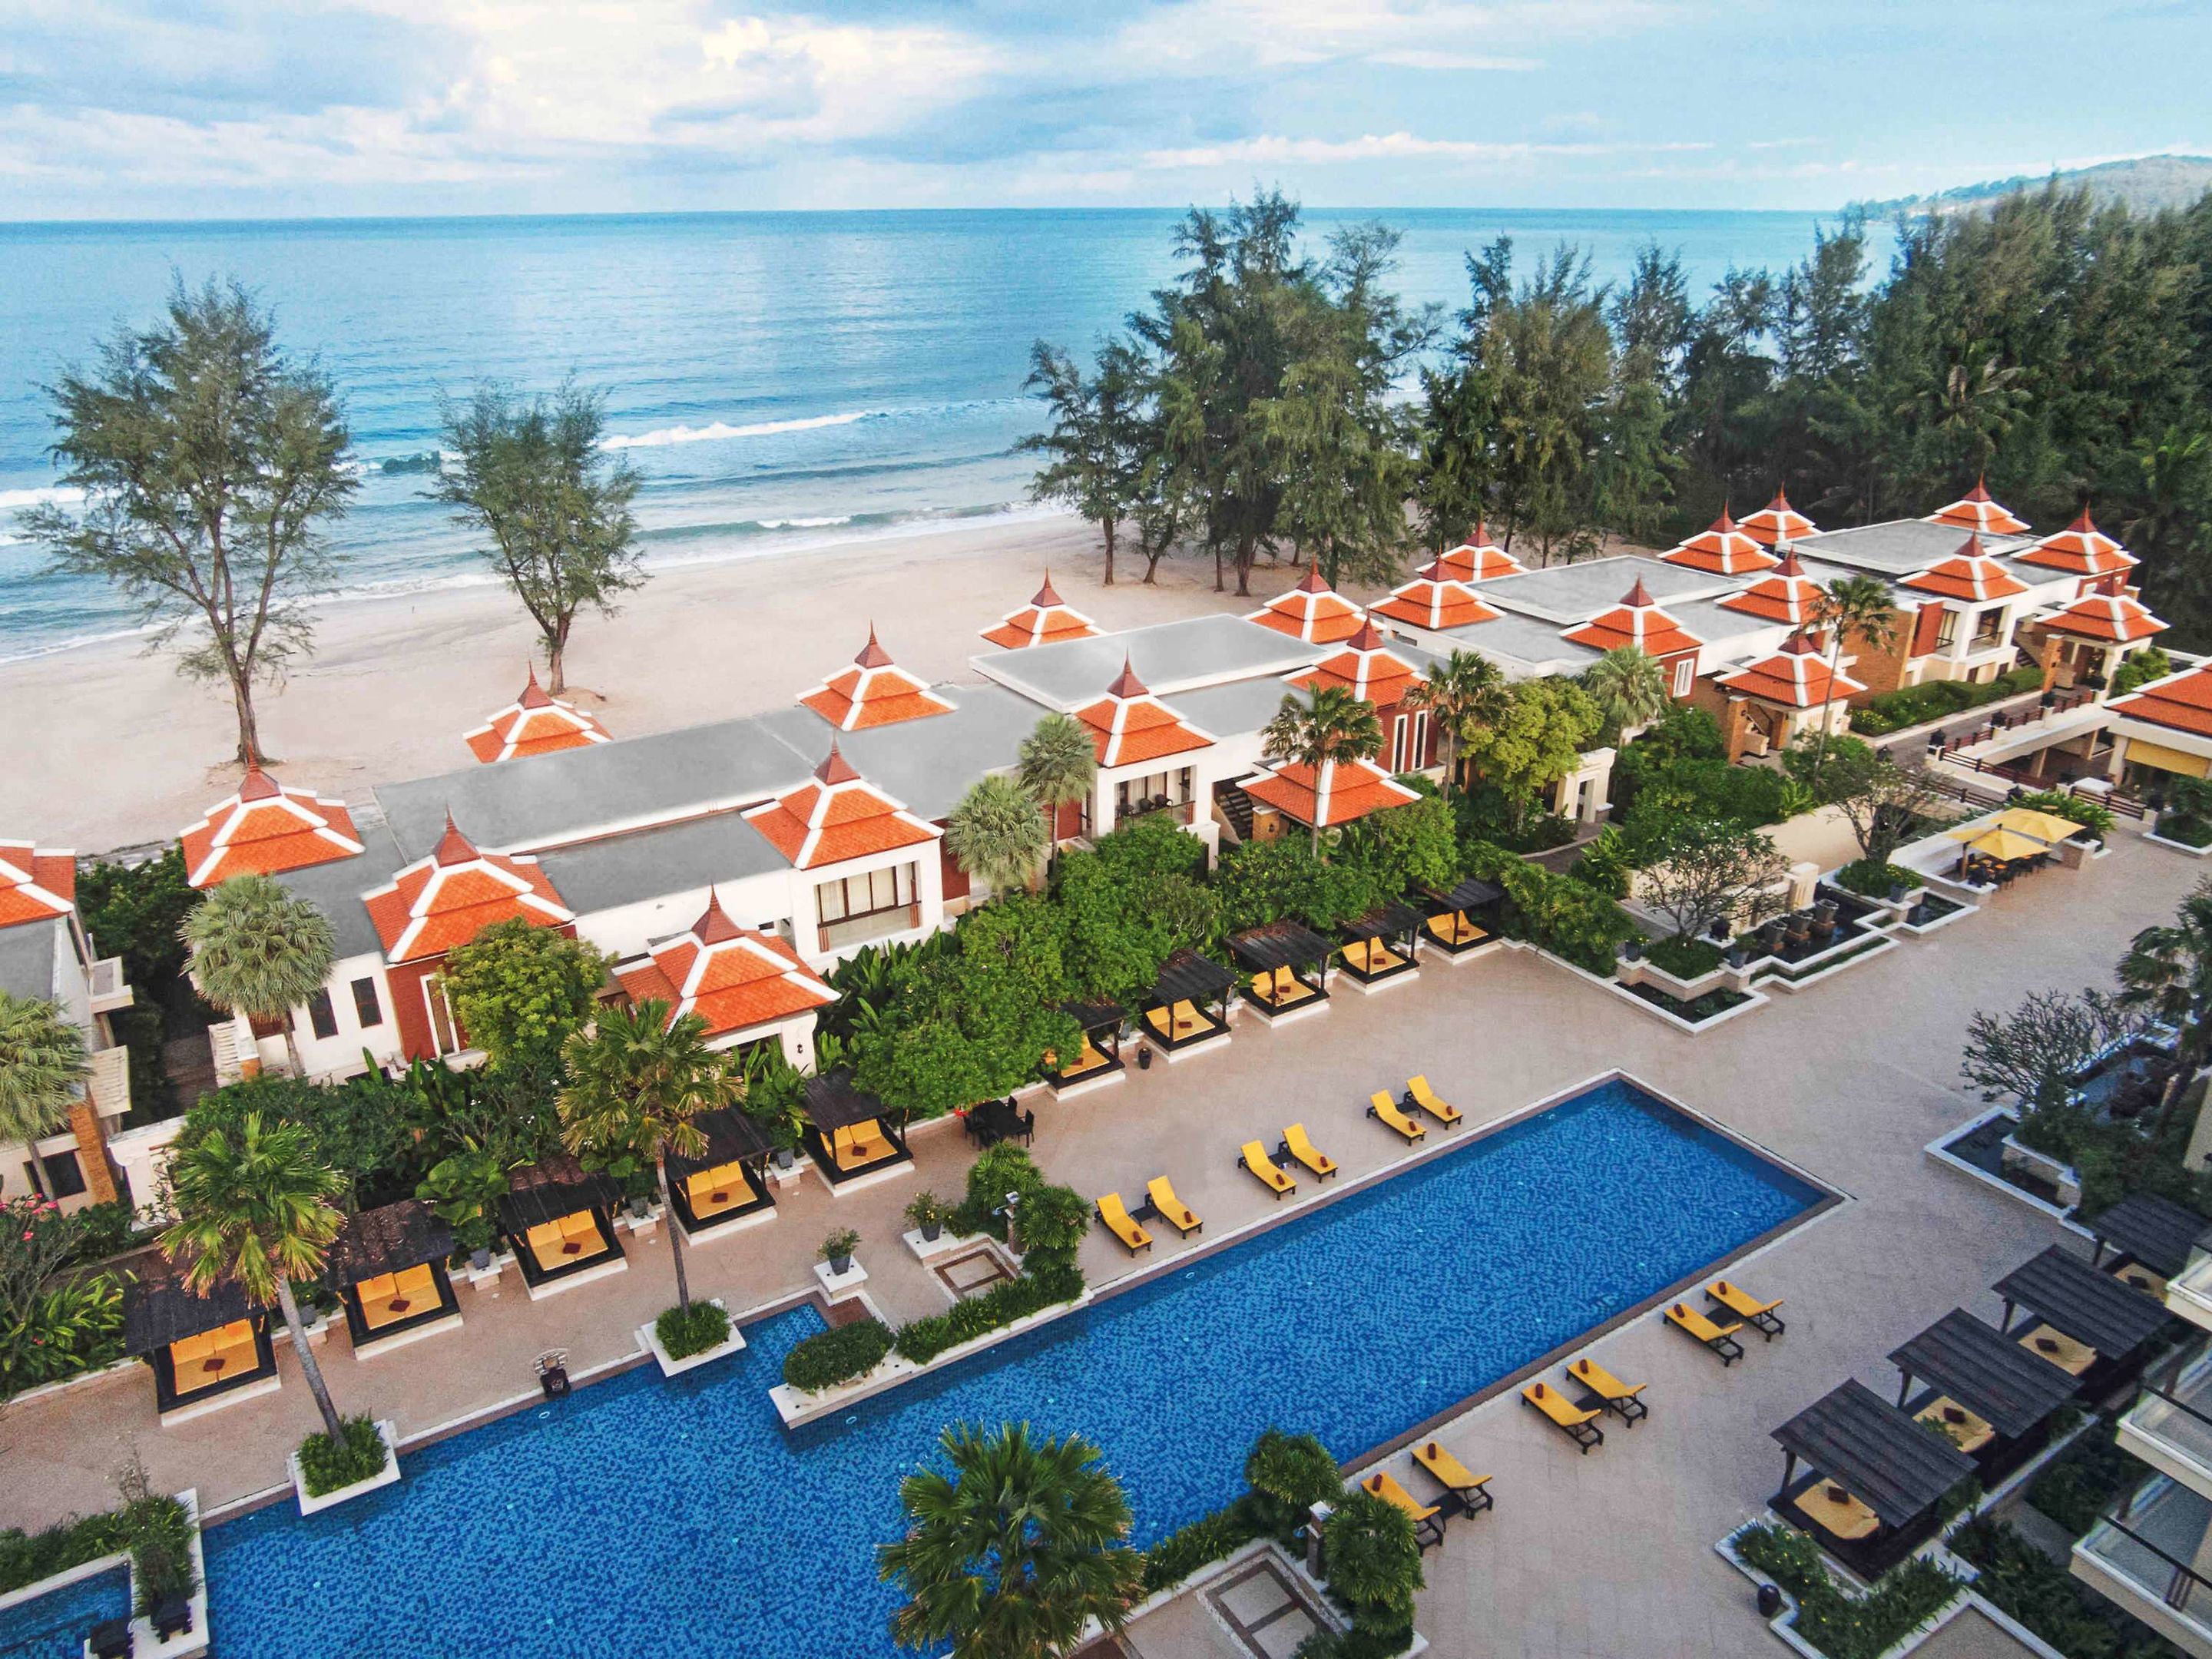 Mövenpick Resort Bangtao Beach Phuket